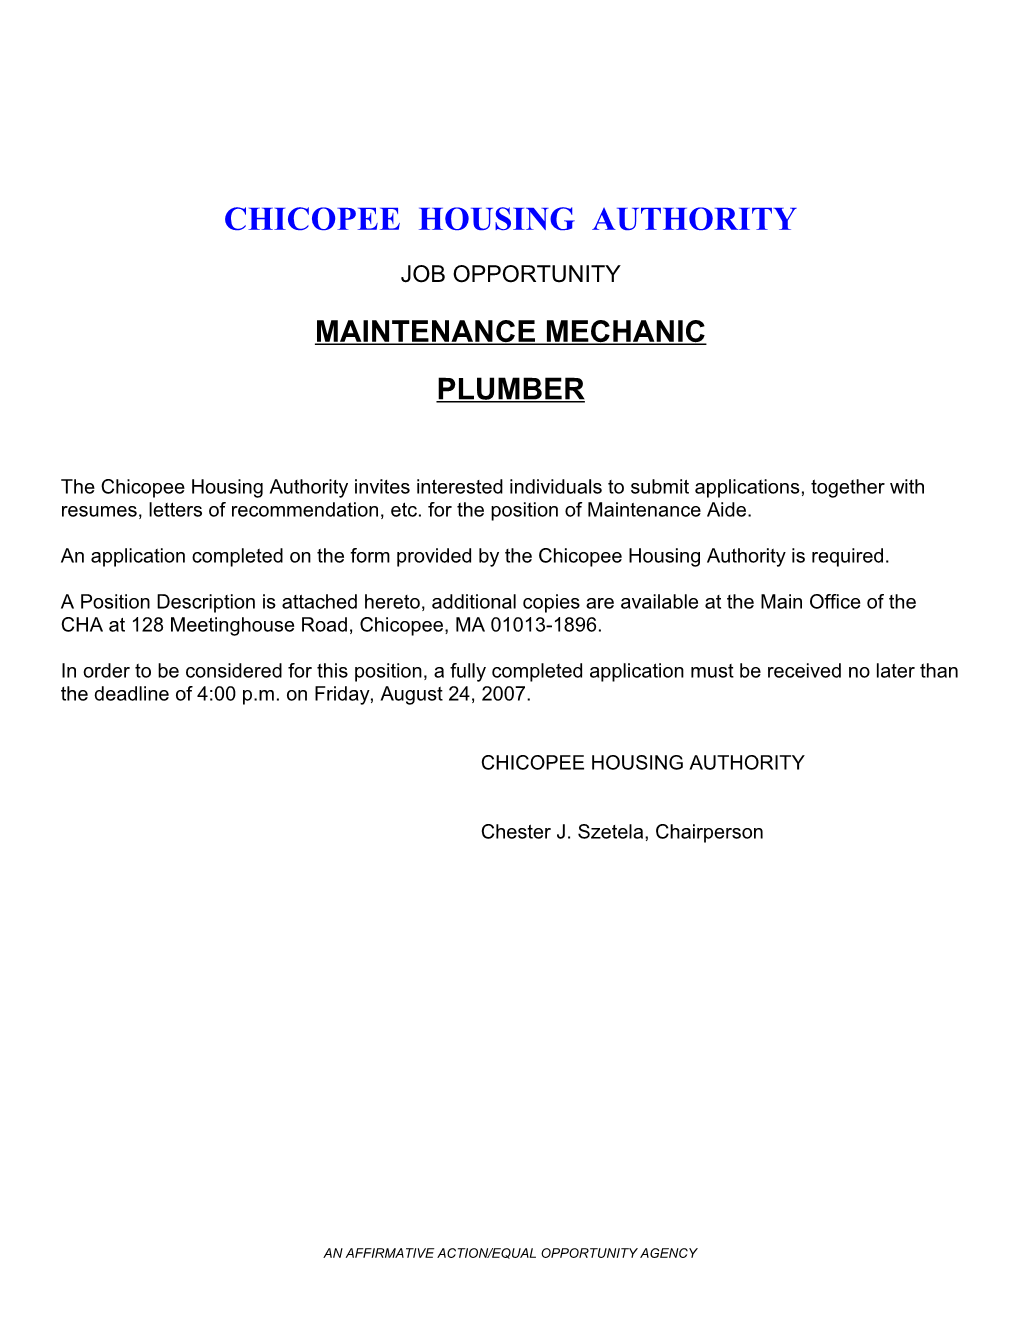 Chicopee Housing Authority